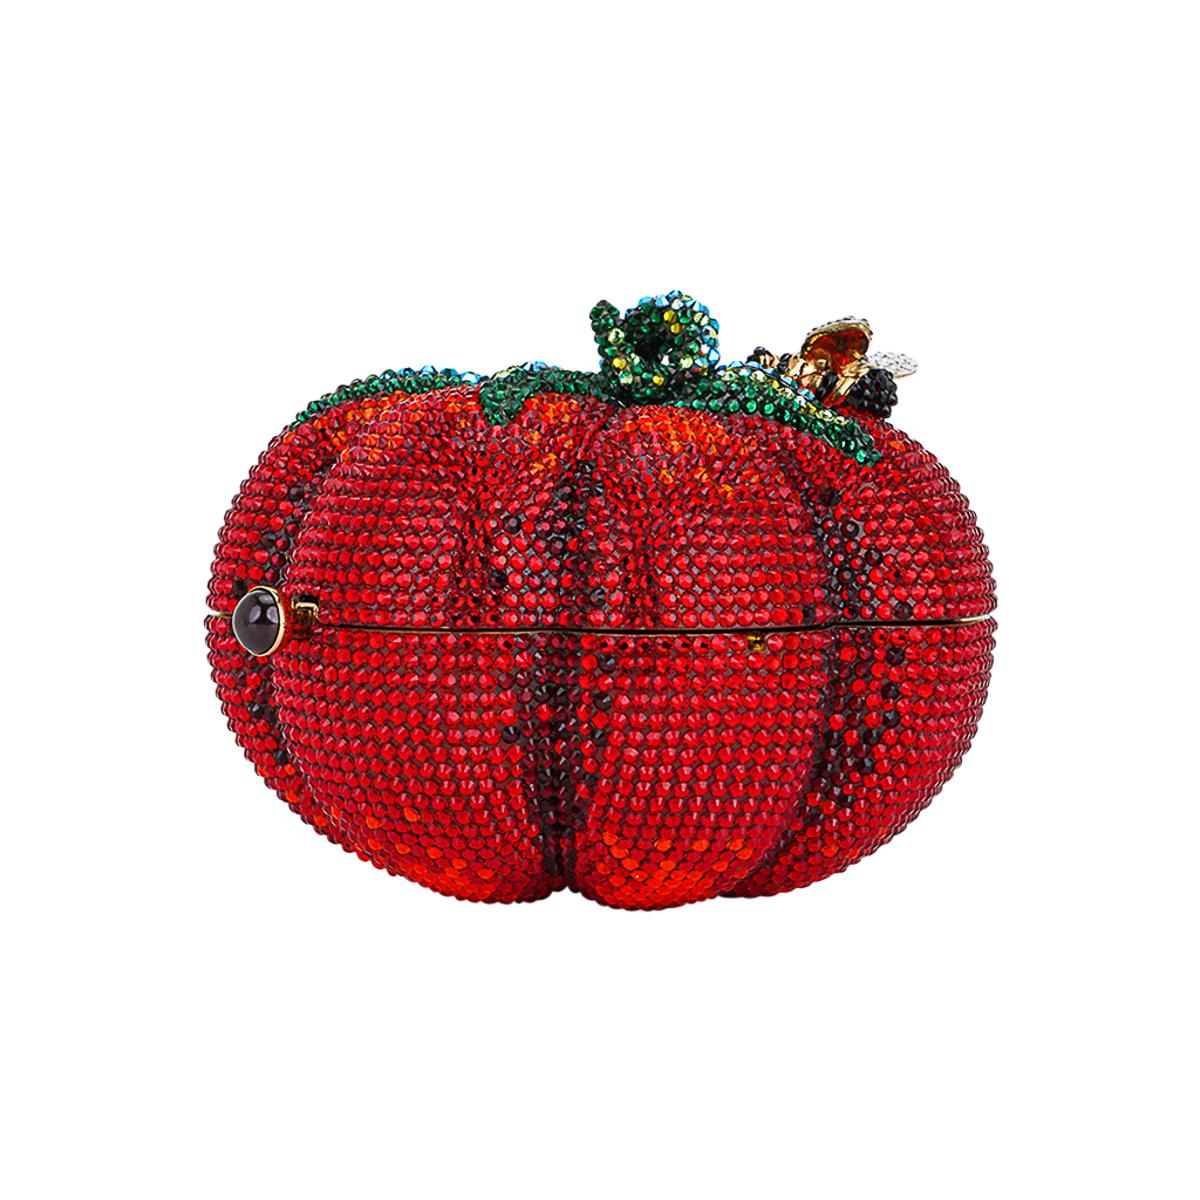 Women's Judith Lieber Tomato Heirloom Minaudiere Limited Edition Bag